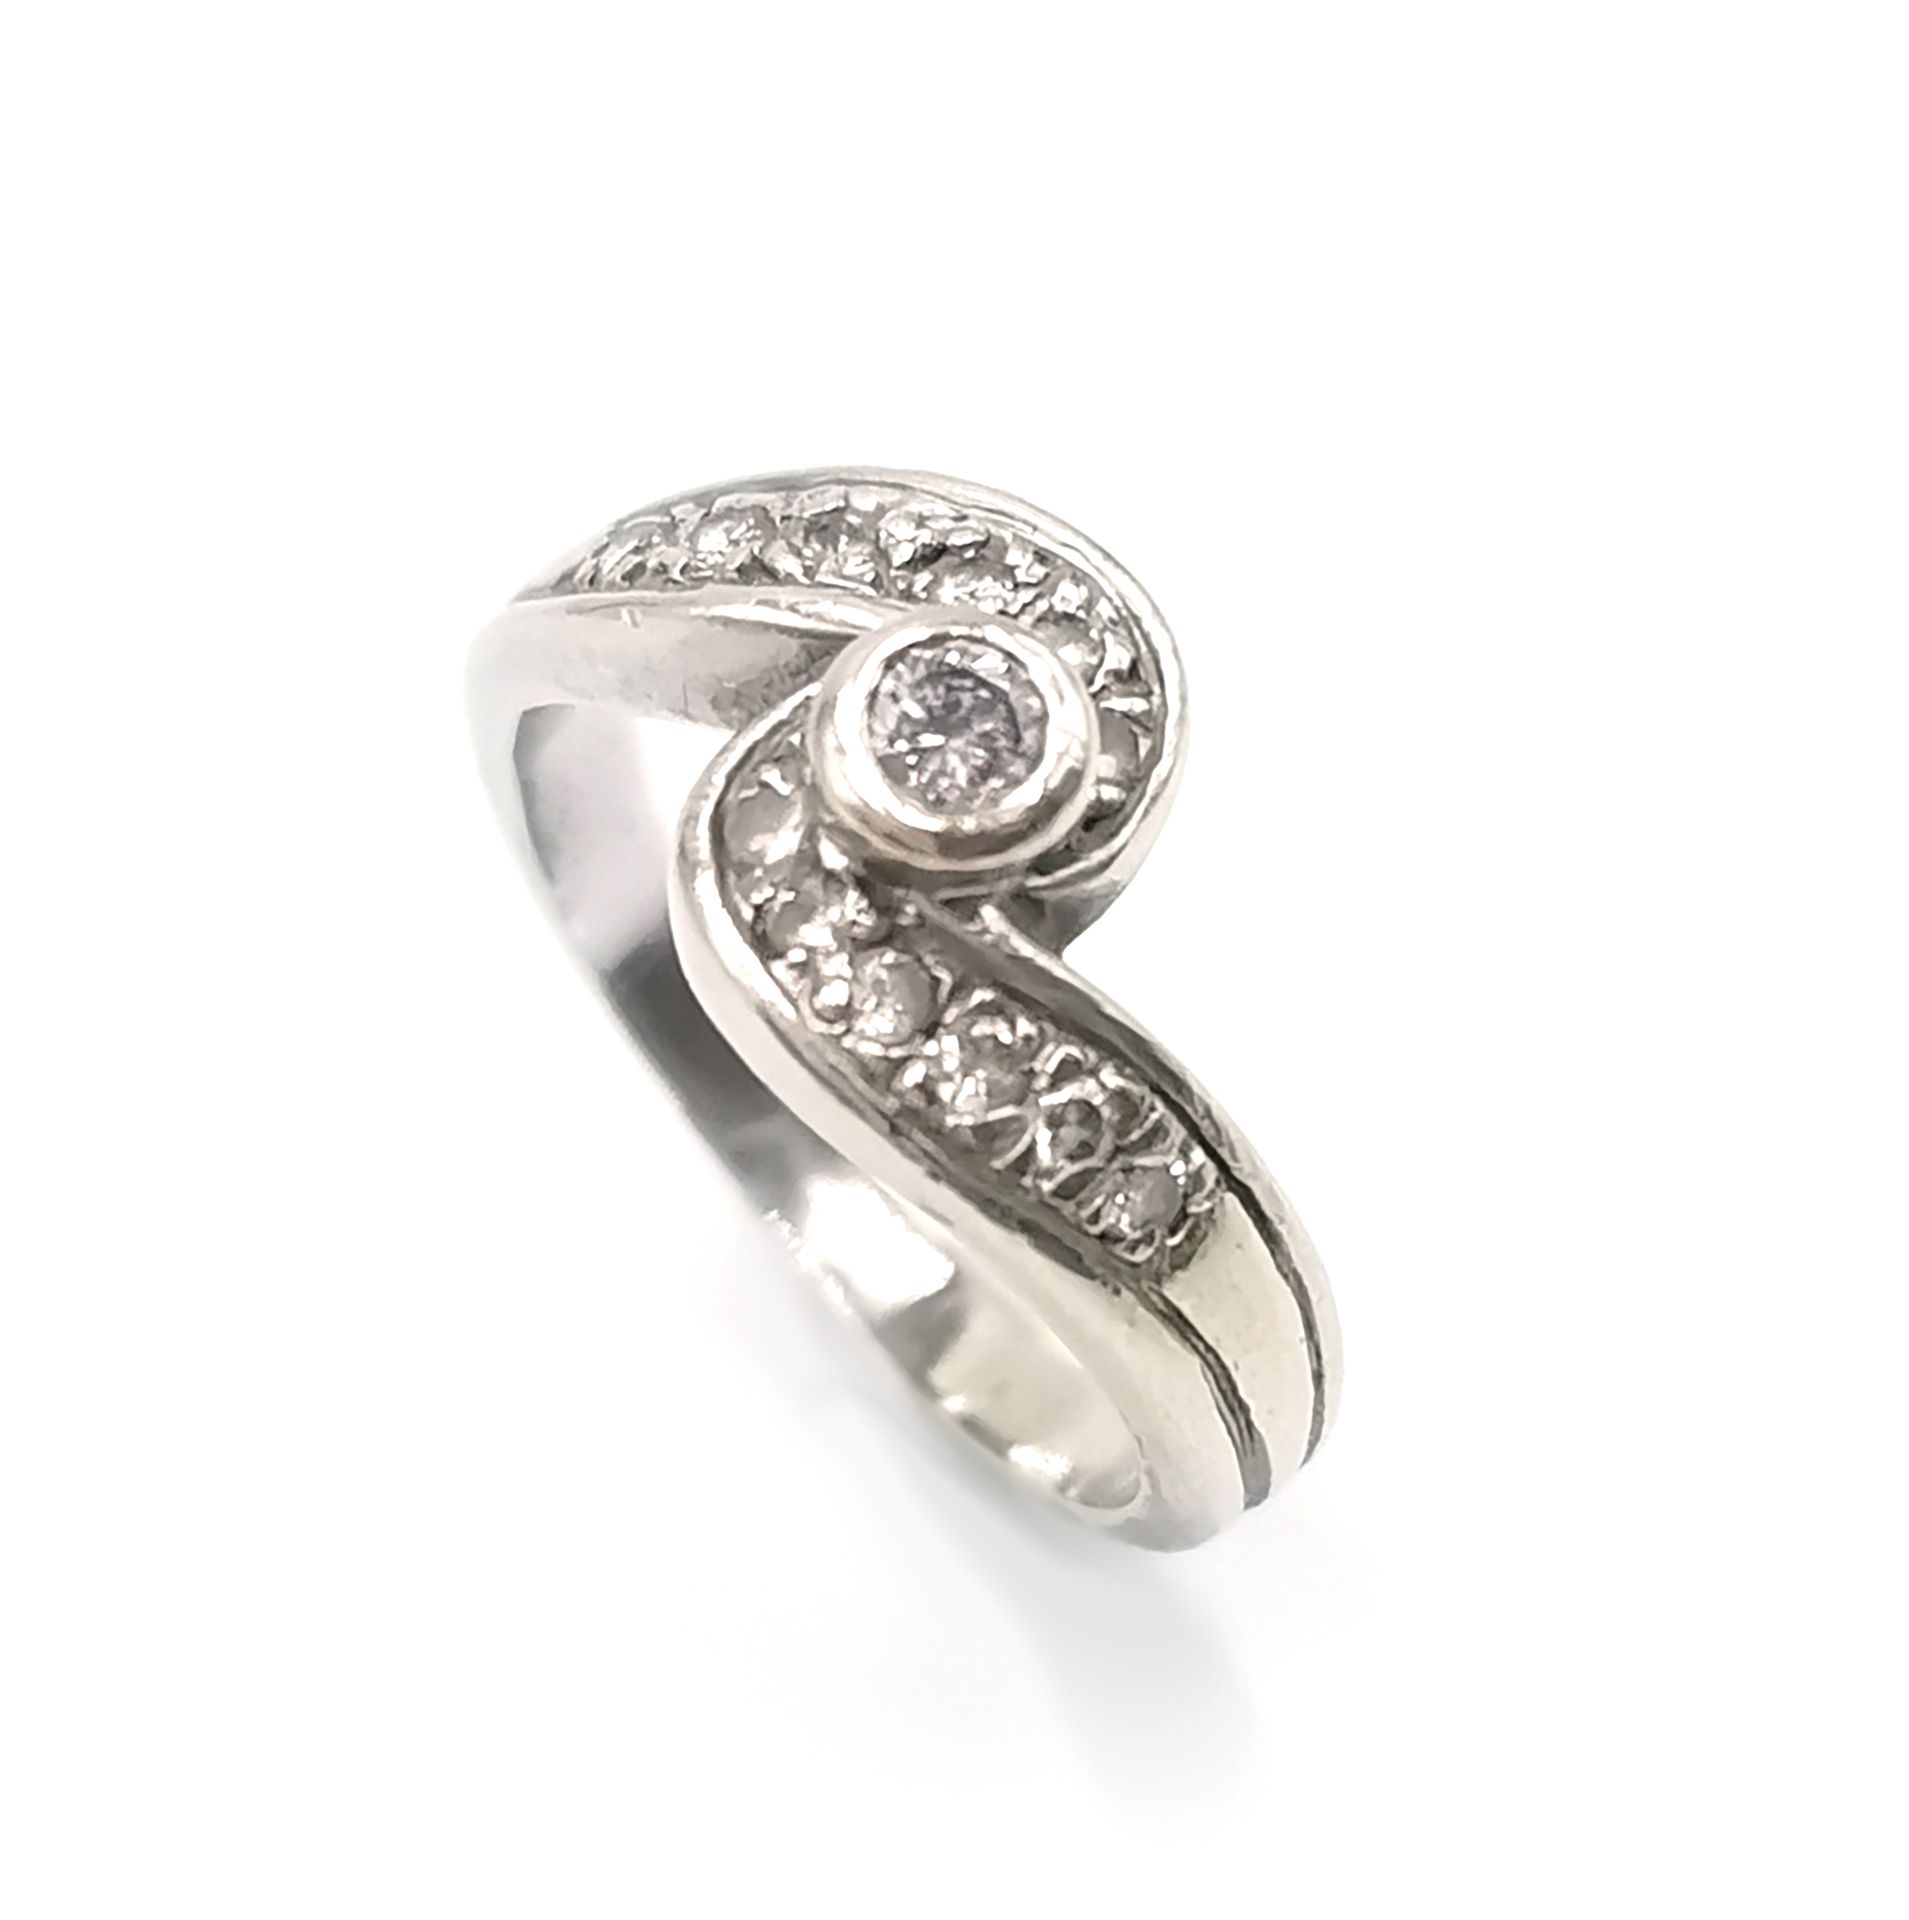 Null 18K（750千分之一）白金陀飞轮戒指，镶嵌着一颗中央圆钻和两行钻石

转指：51

毛重：5克。